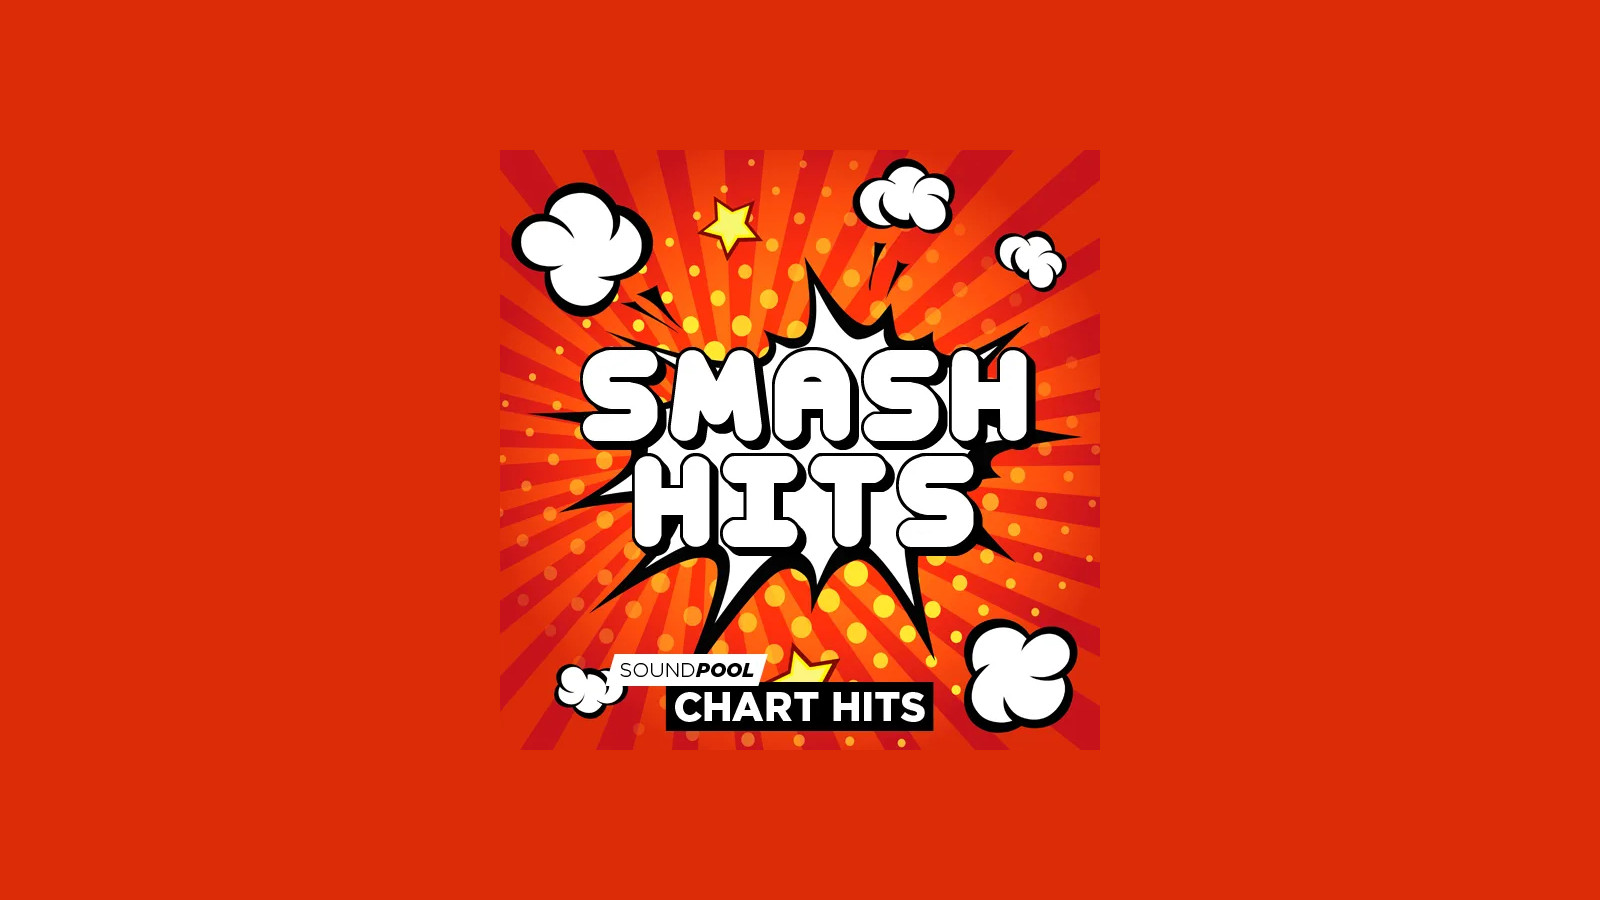 MAGIX Soundpool Smash Hits ProducerPlanet CD Key 5.65 $